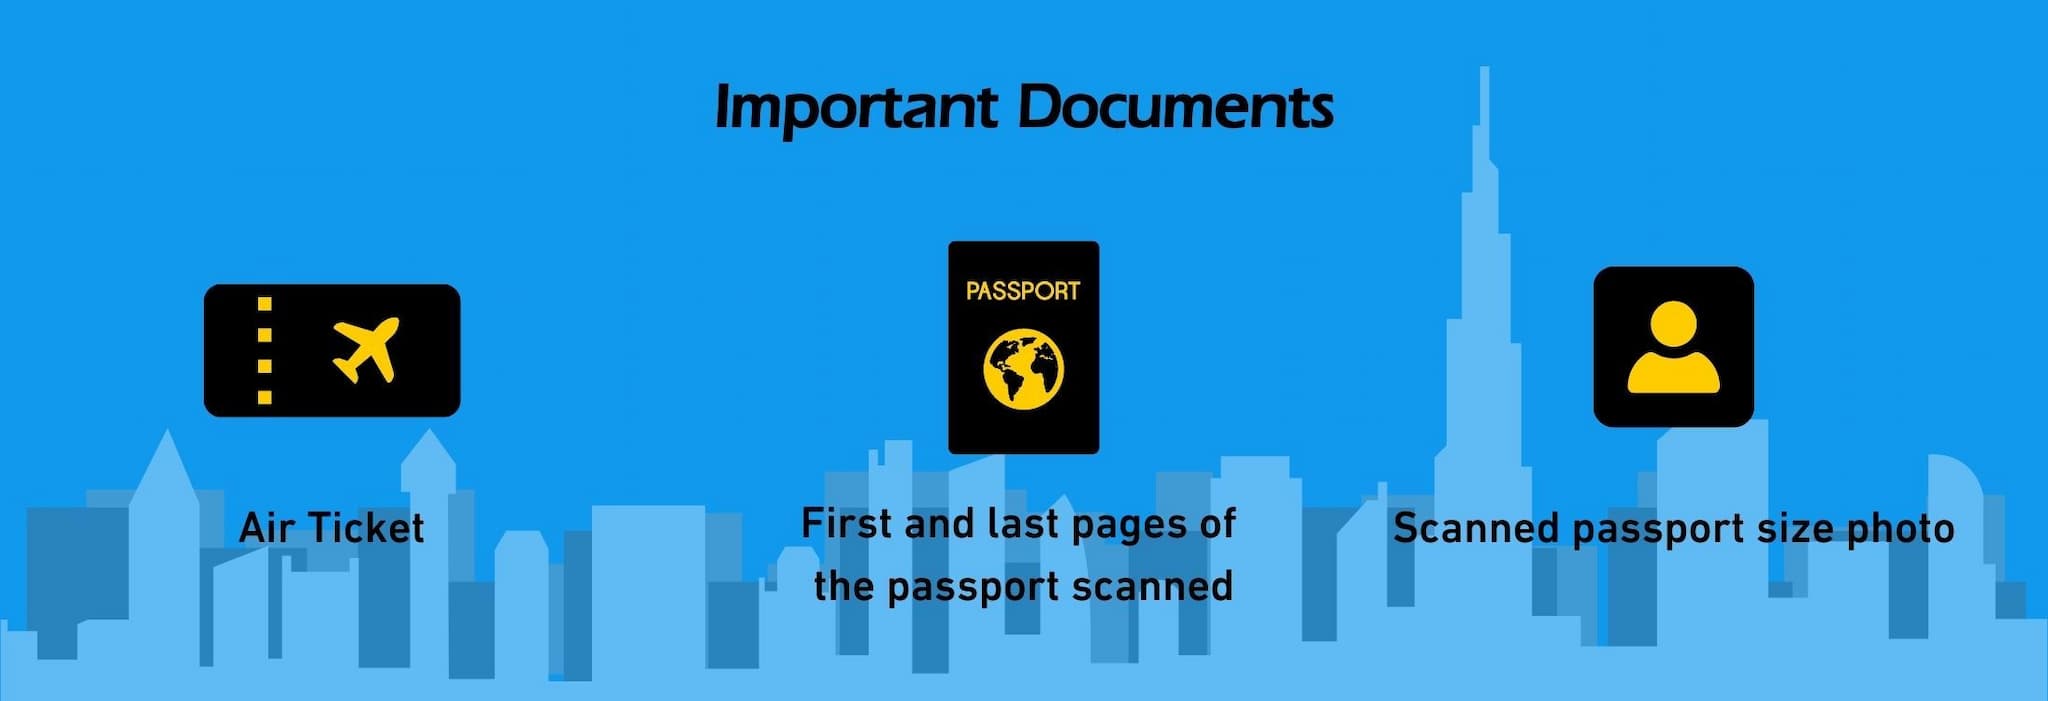 Important Document for 90 days Dubai Visa